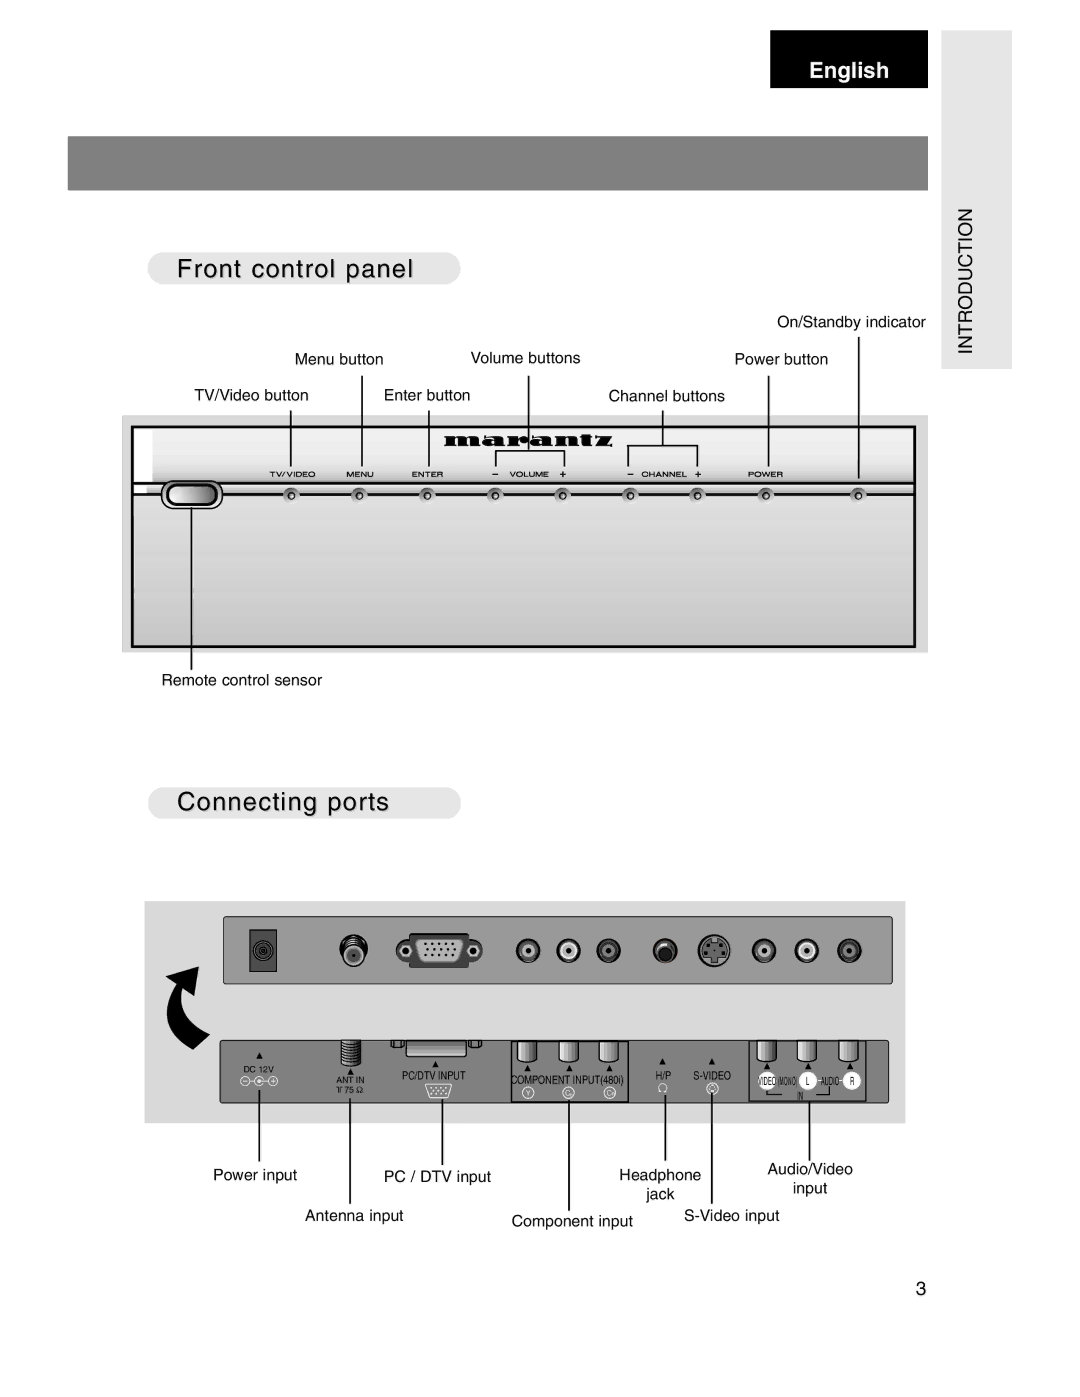 Marantz LC1510 manual Front control panel, Connecting ports 